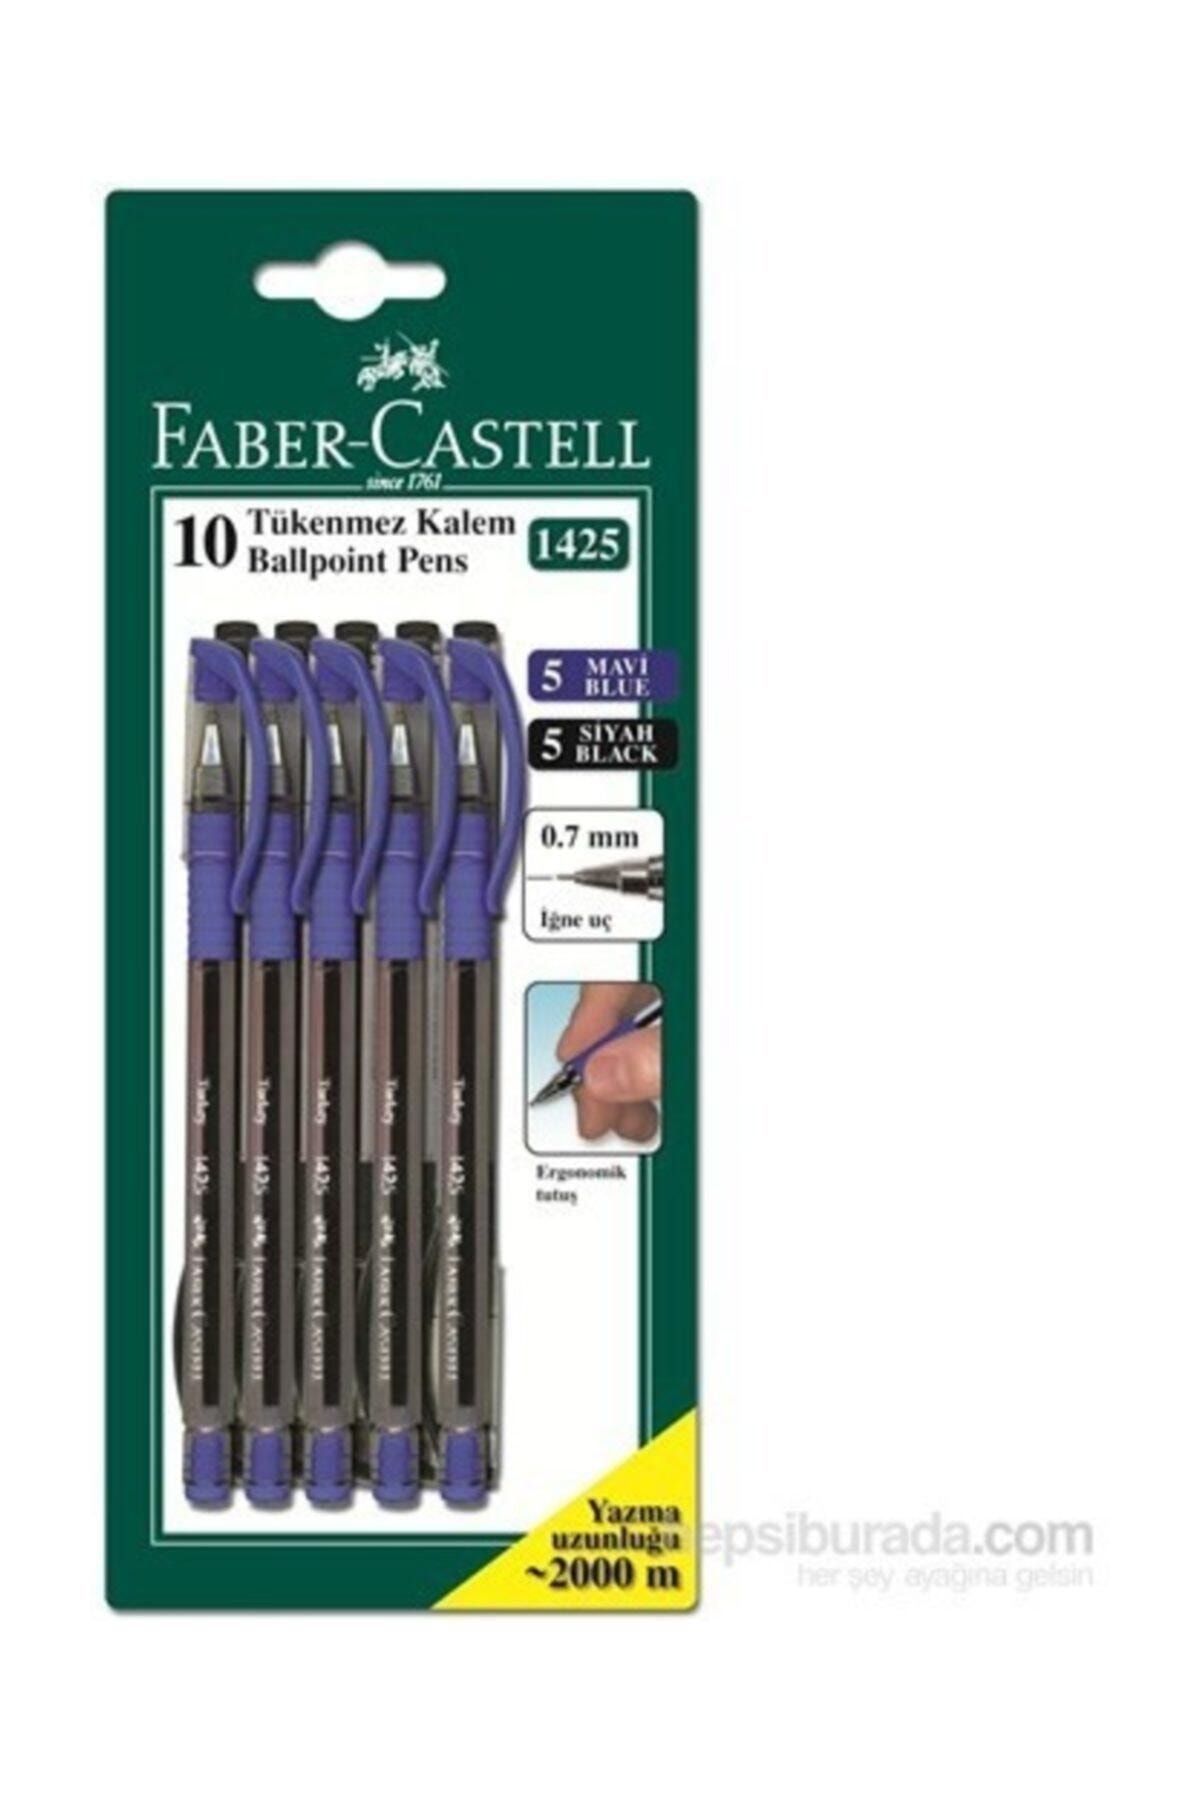 Faber Castell Fc 1425 2 Renk Tükenmez -5 Siyah 5 Mavi 10'lu (5500142510) Tk.k